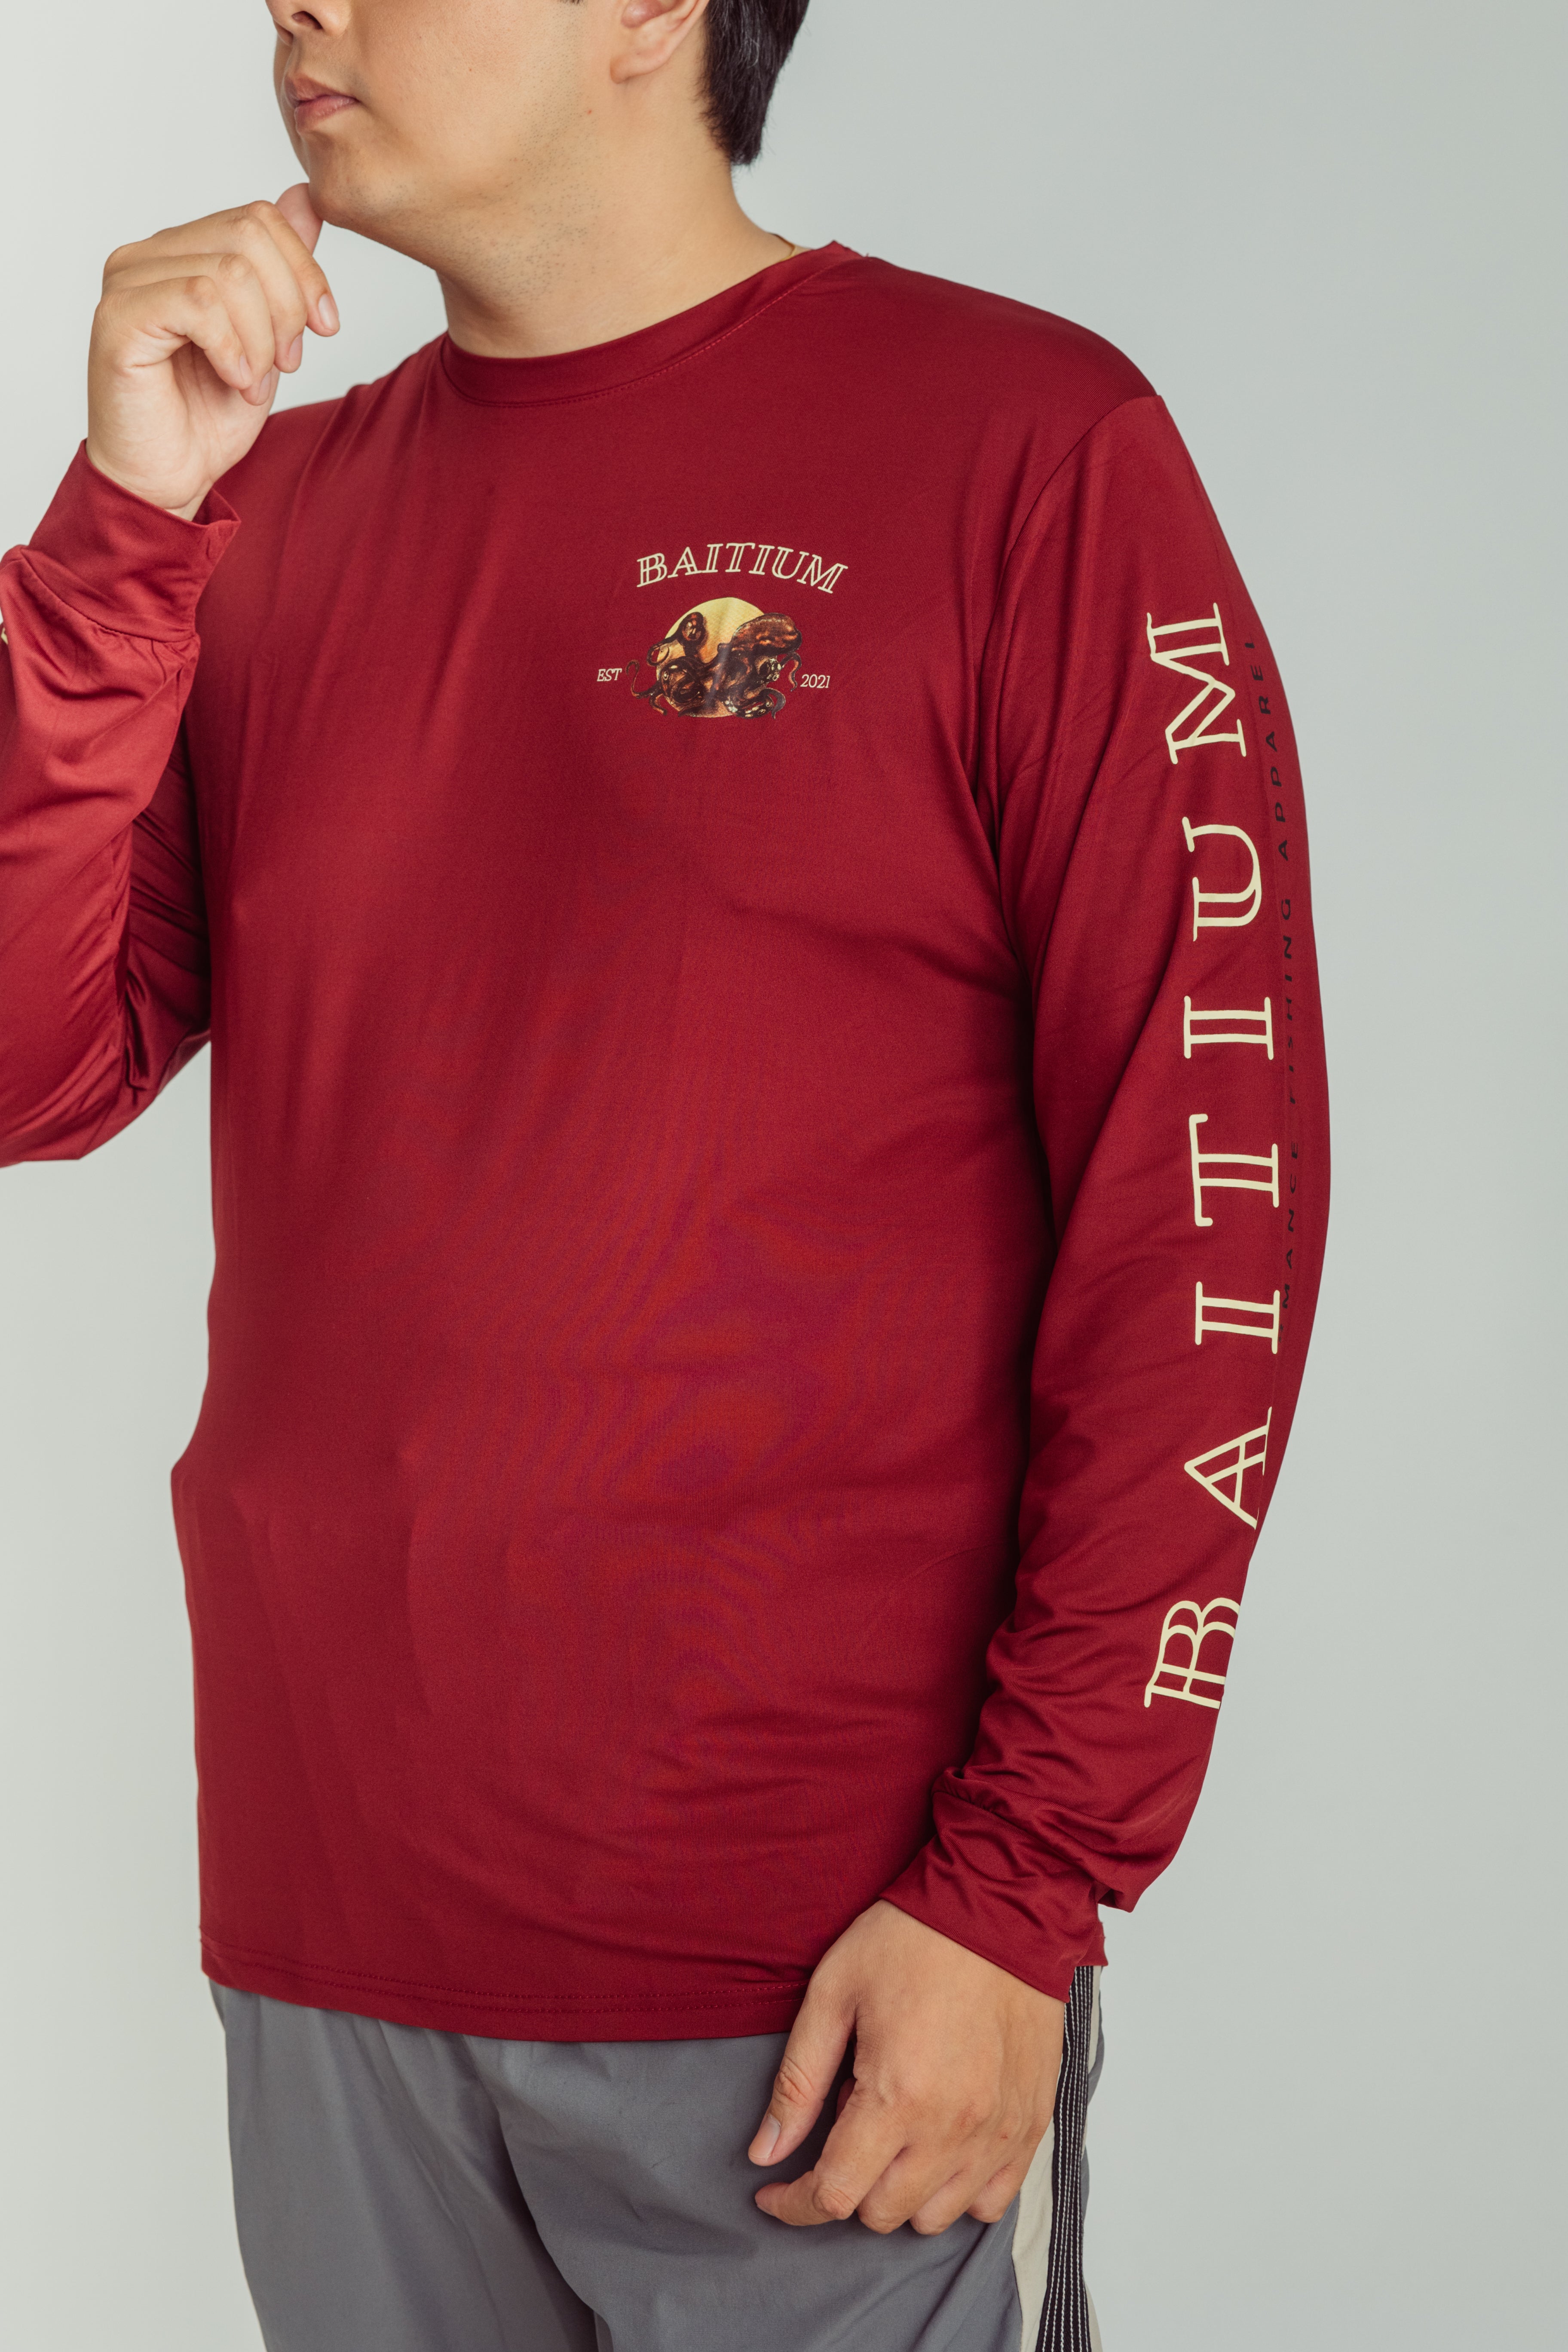 Baitium Original Hooded UPF 50+ PFG Long Sleeves Fishing Shirts Grey / XX-Large